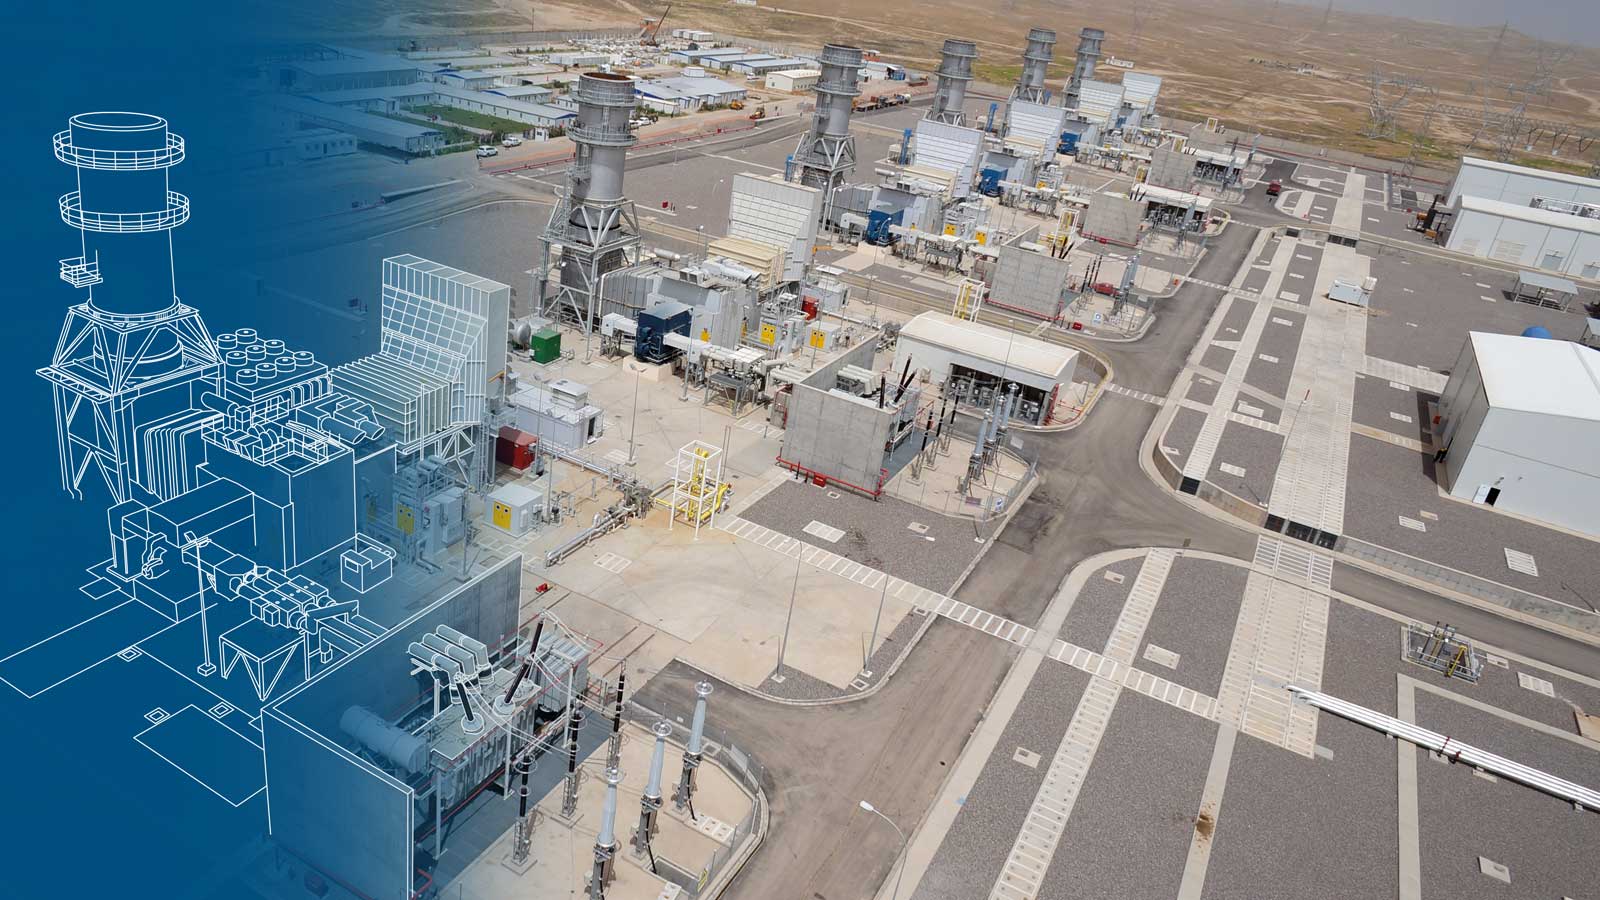 Nainawa 750 MW Çift Yakıtlı Basit Çevrim Enerji Santrali, Irak                                                                                                                                                                                                                                                                                                                                                                                                                                                      